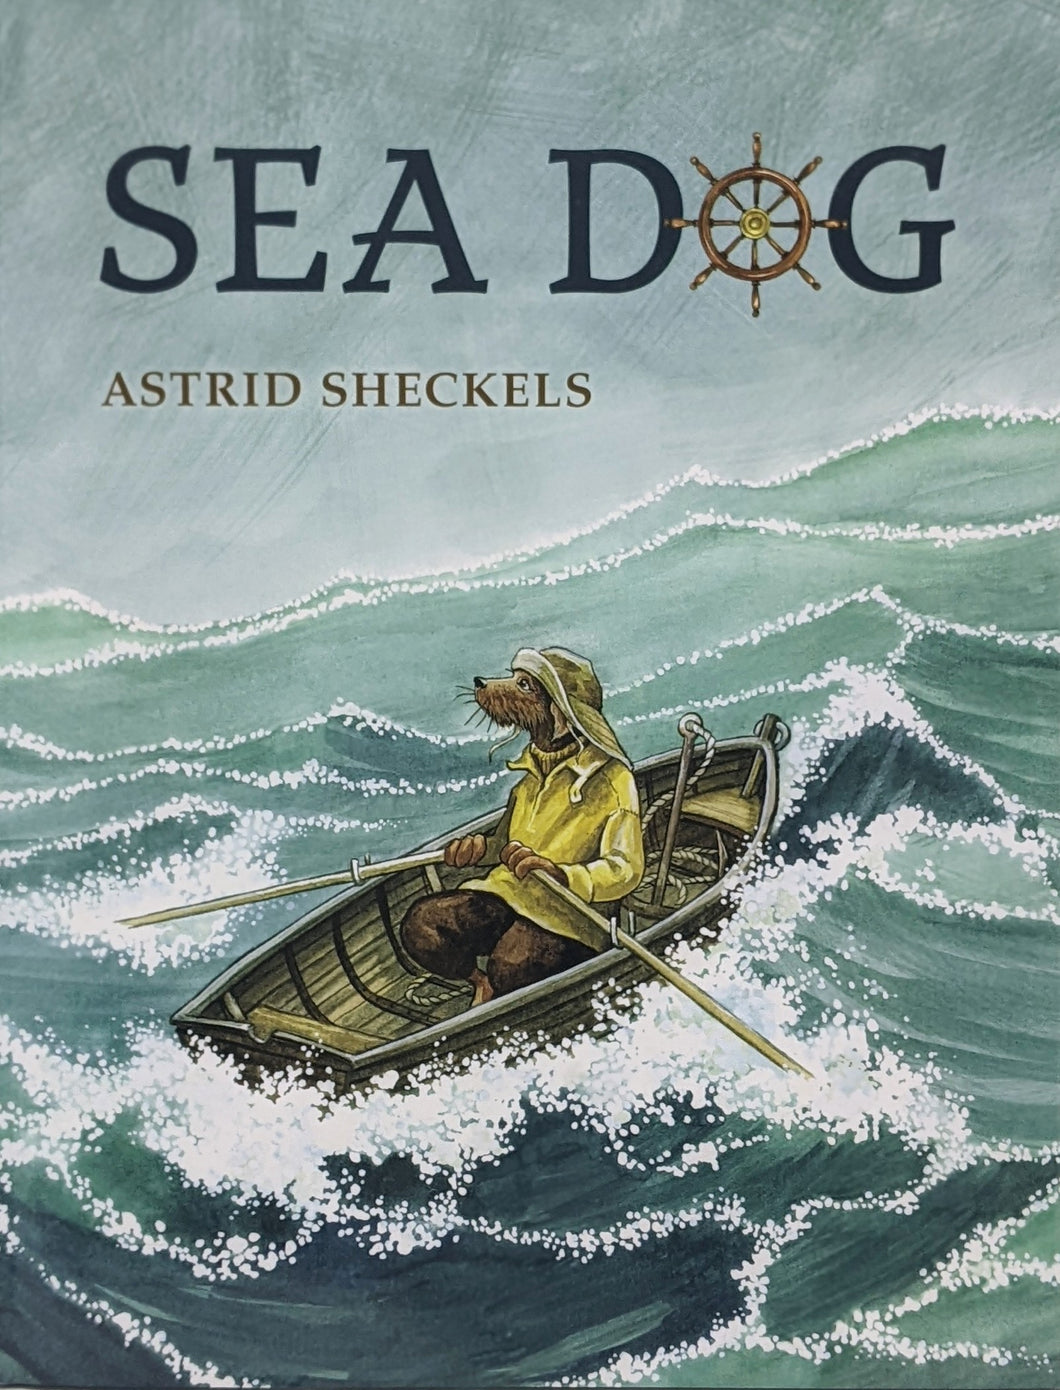 Astrid Sheckels: Book, Sea Dog